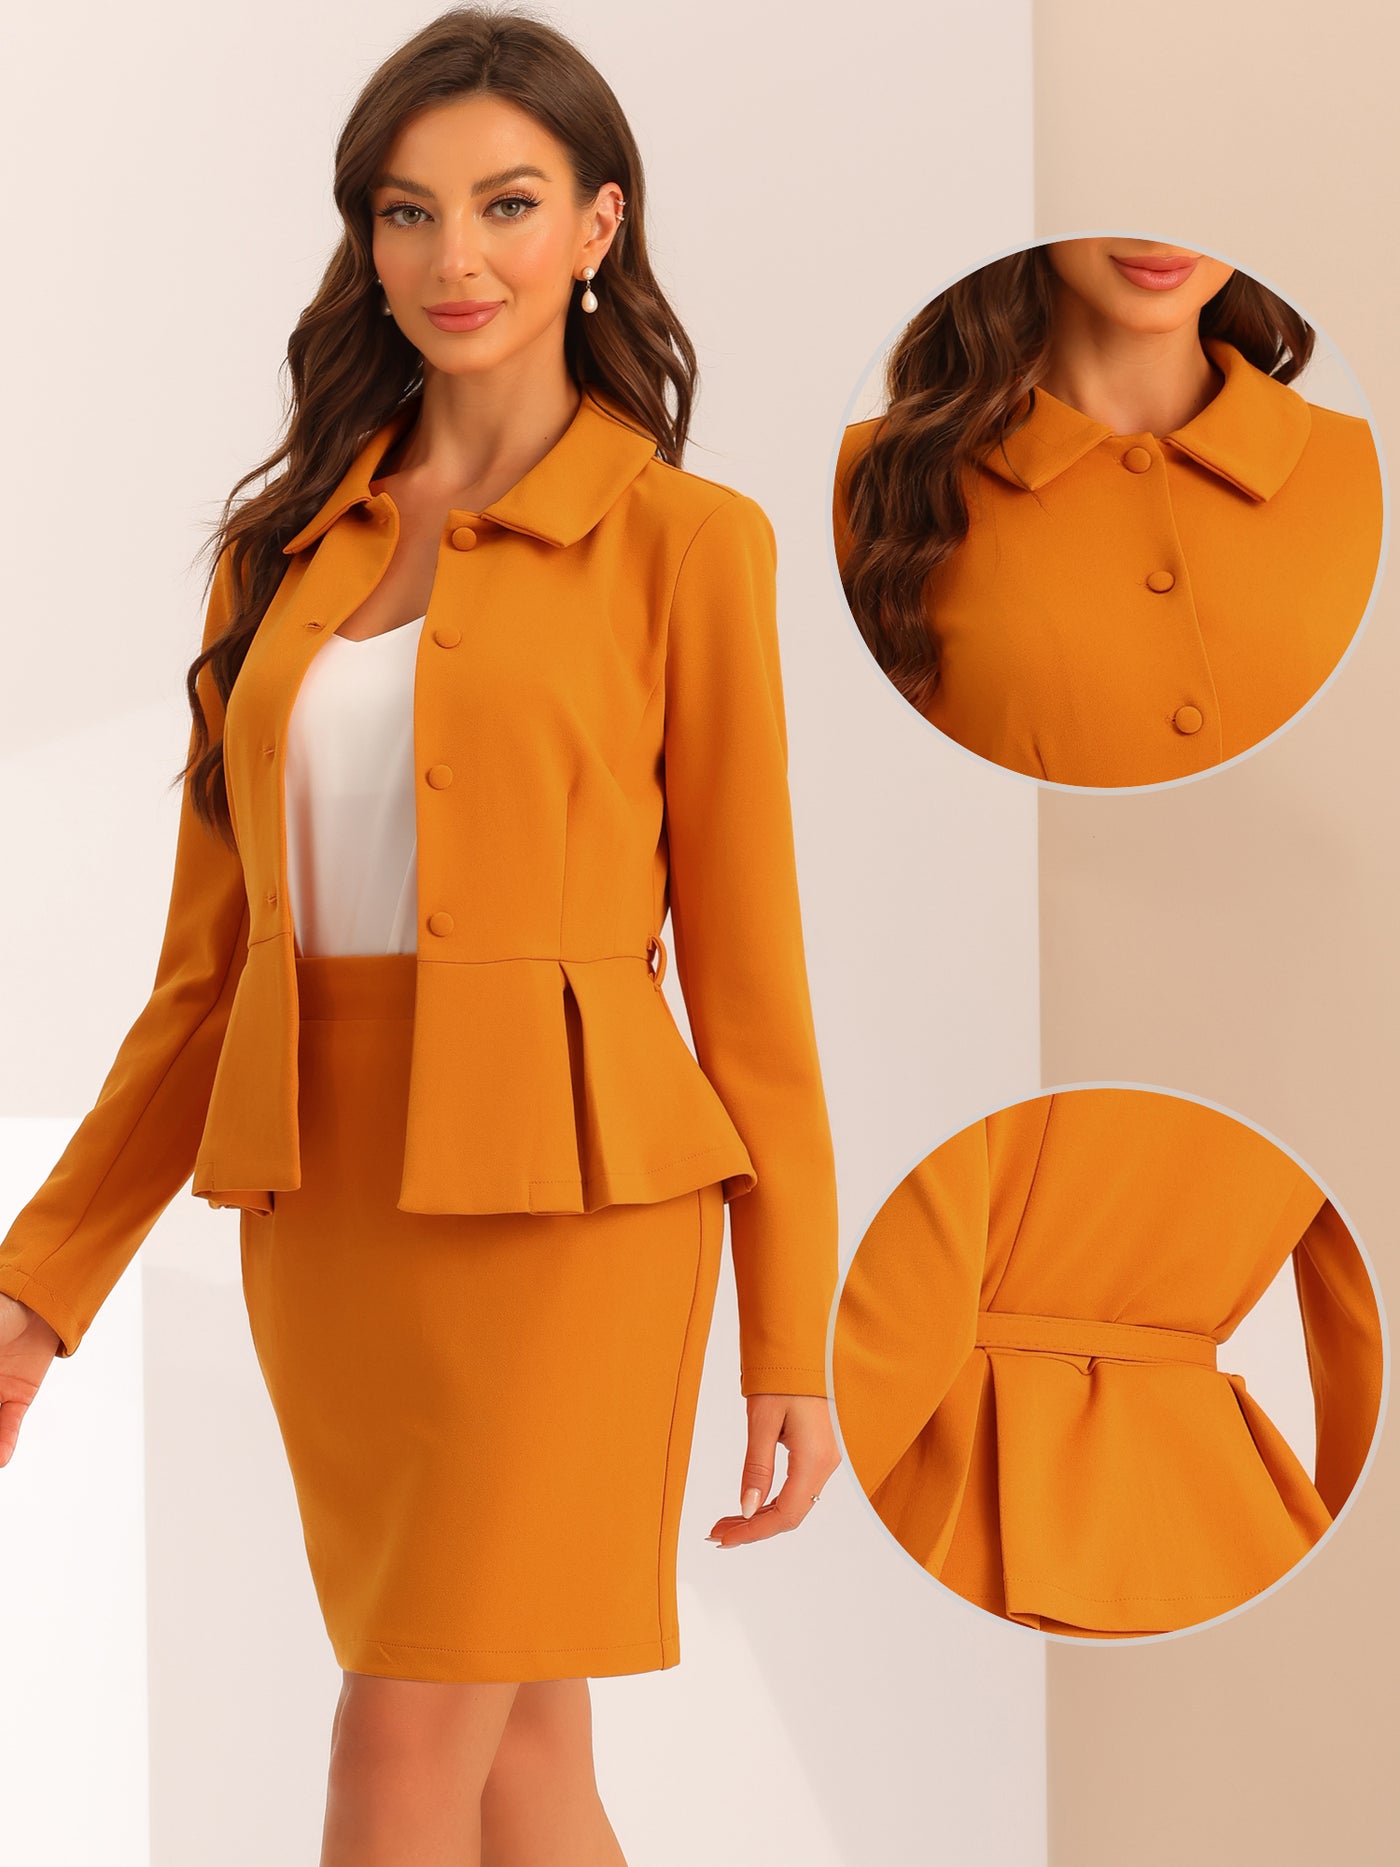 Allegra K 2pc Business Suits Belted Peplum Blazer Jacket and Pencil Skirt Sets